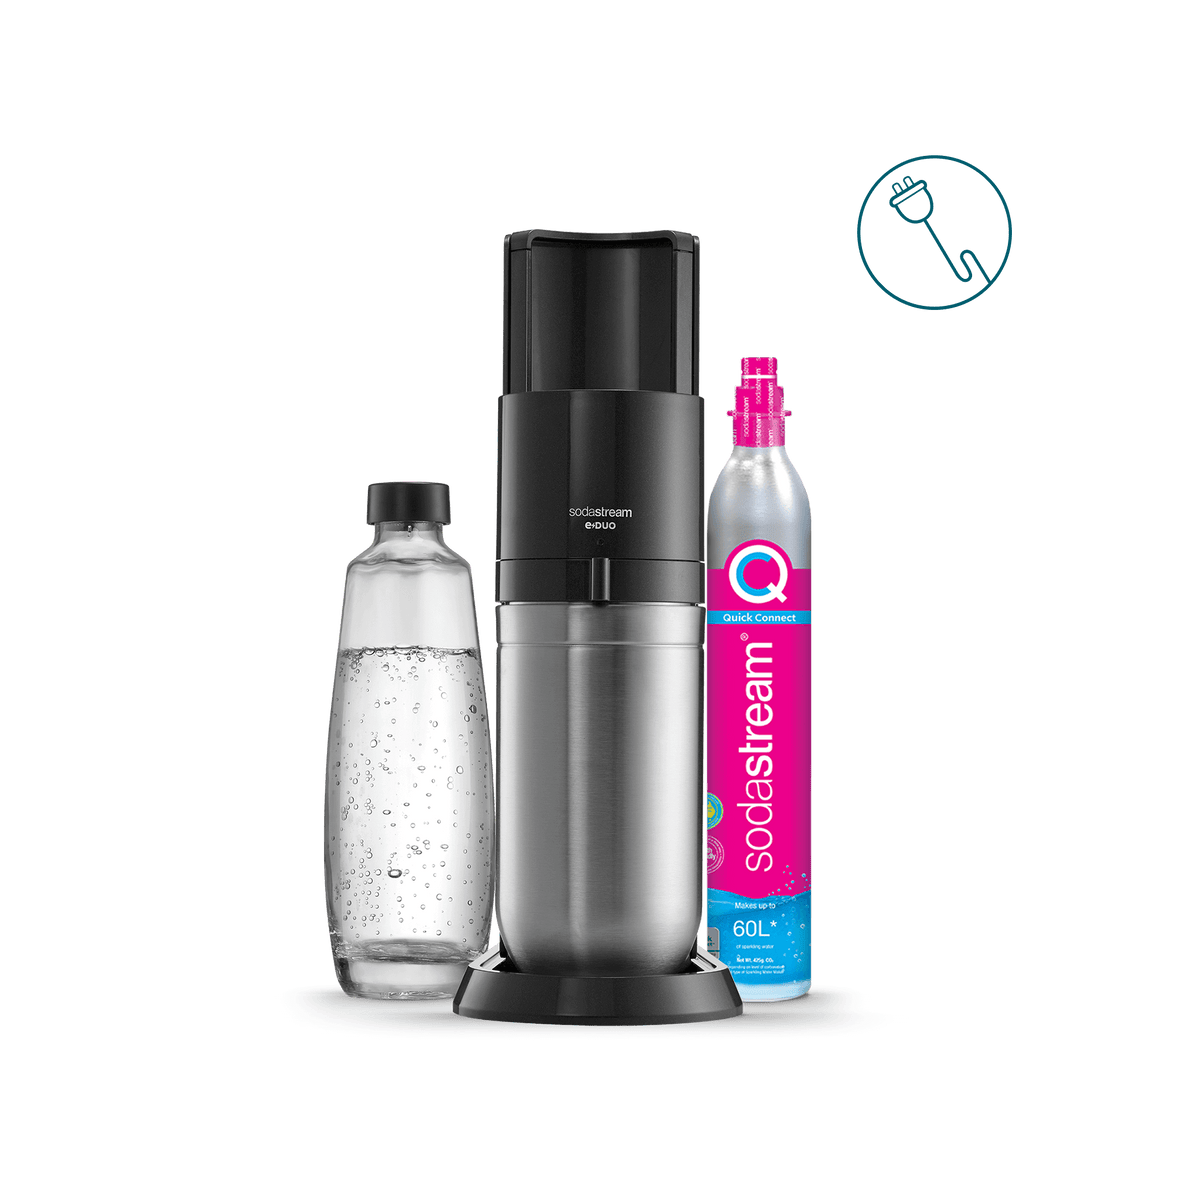 SodaStream E-DUO Sparkling Water Maker